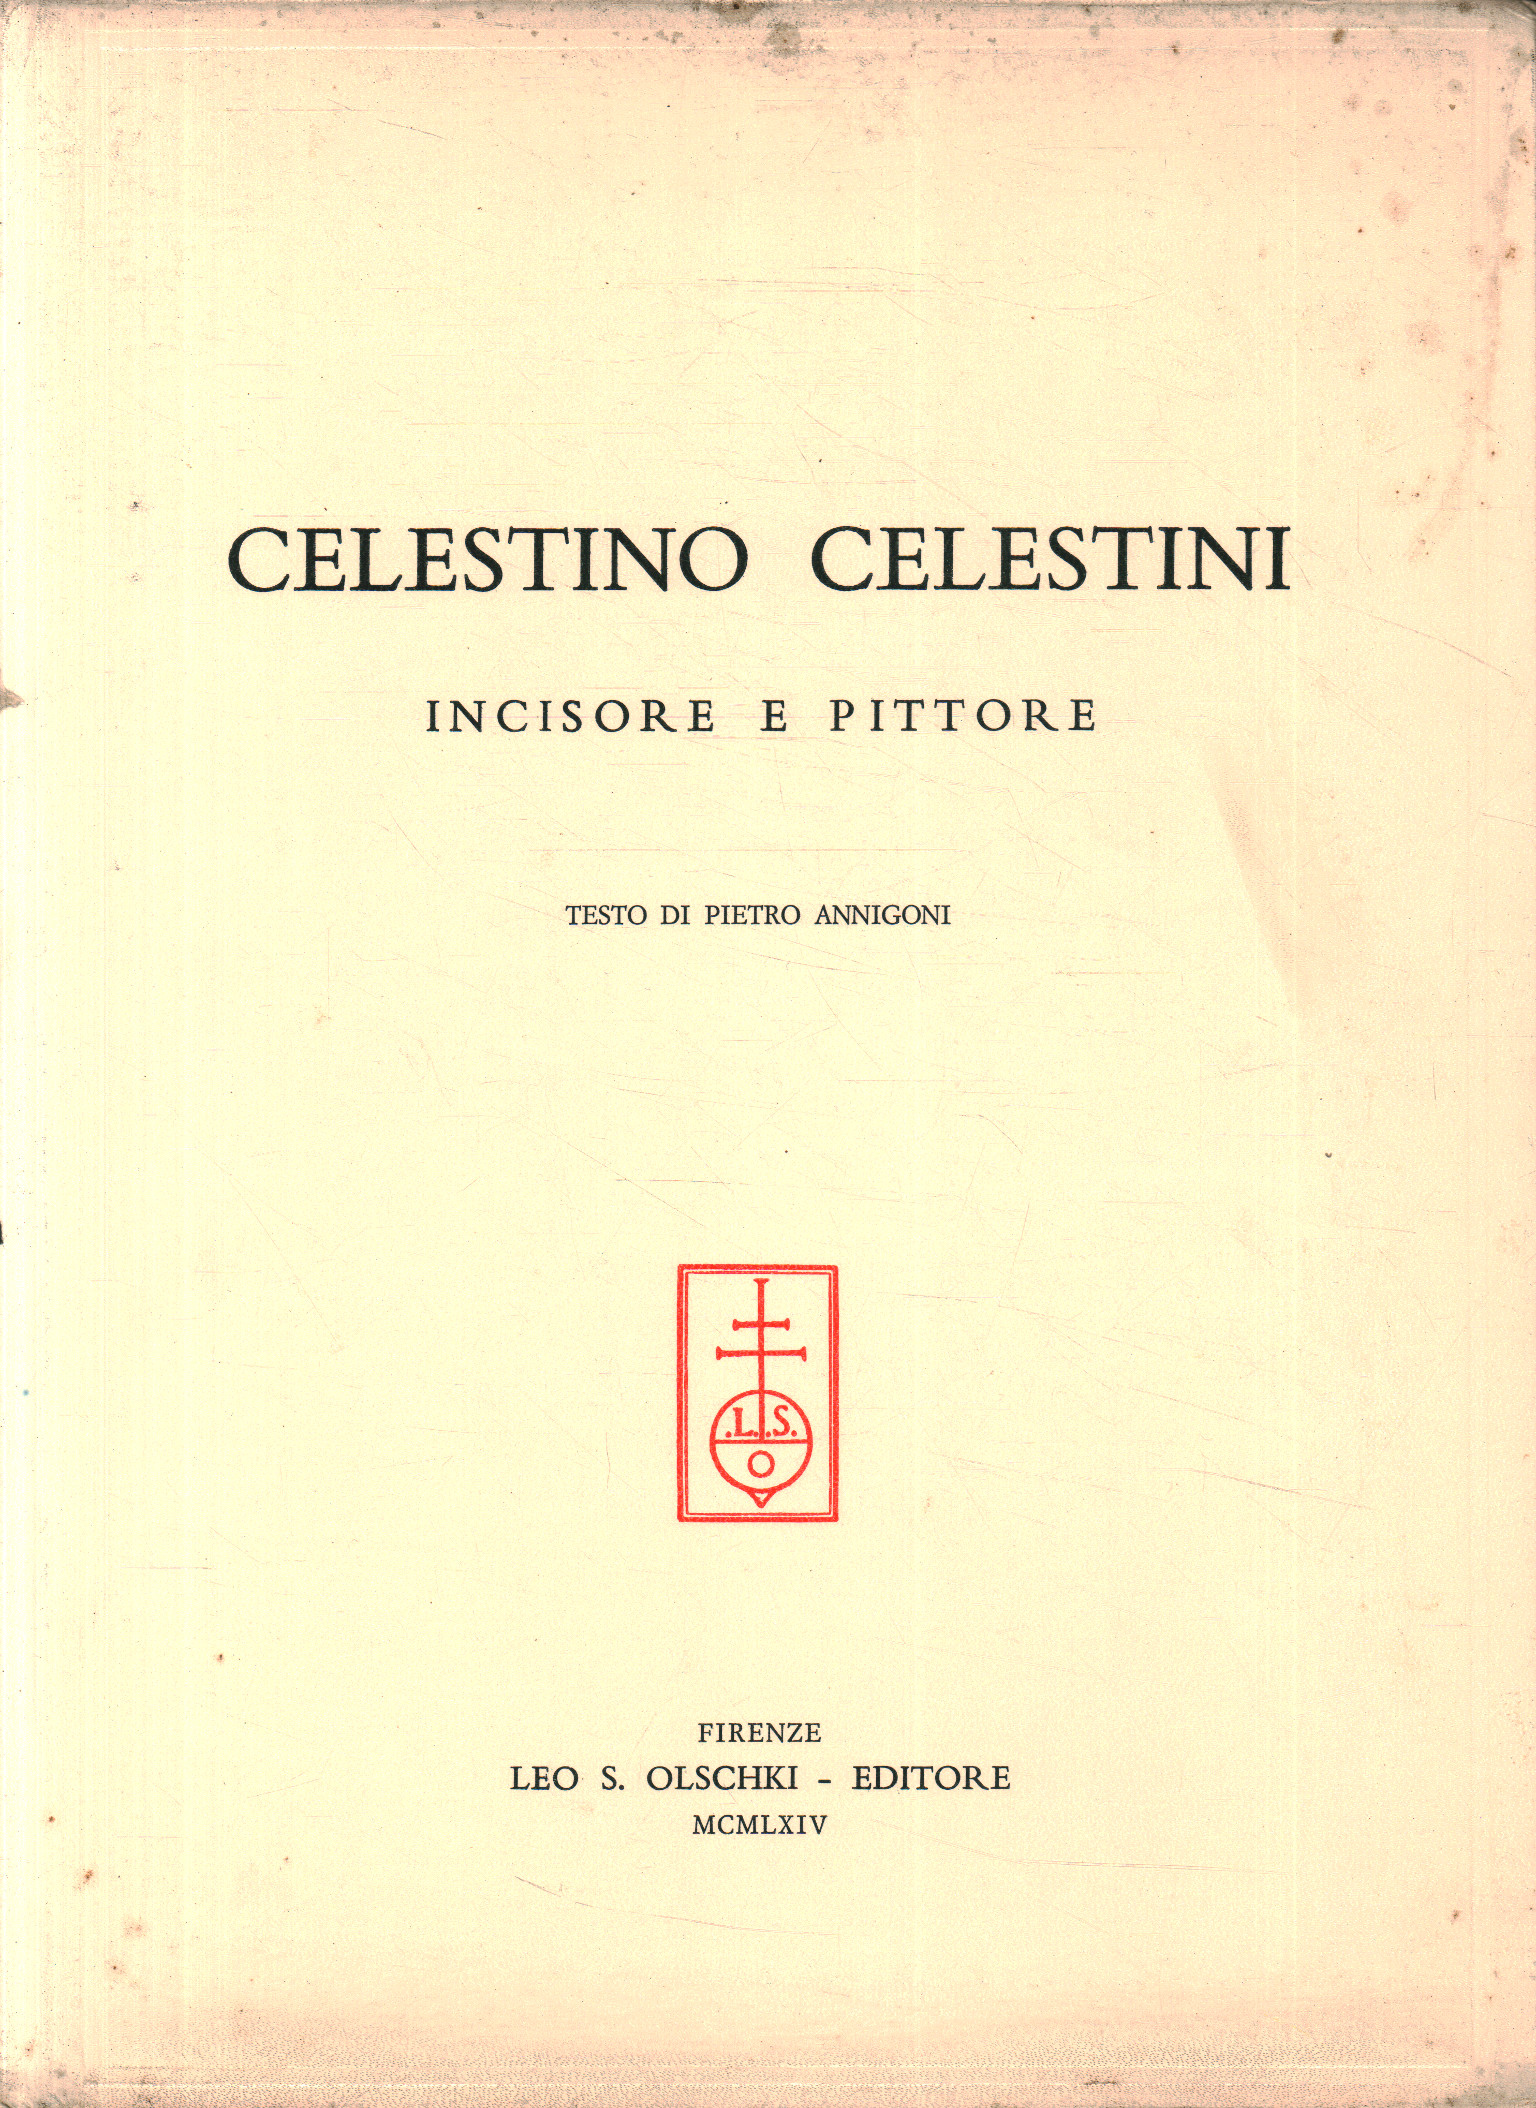 Celestino Celestini. grabador y pintor